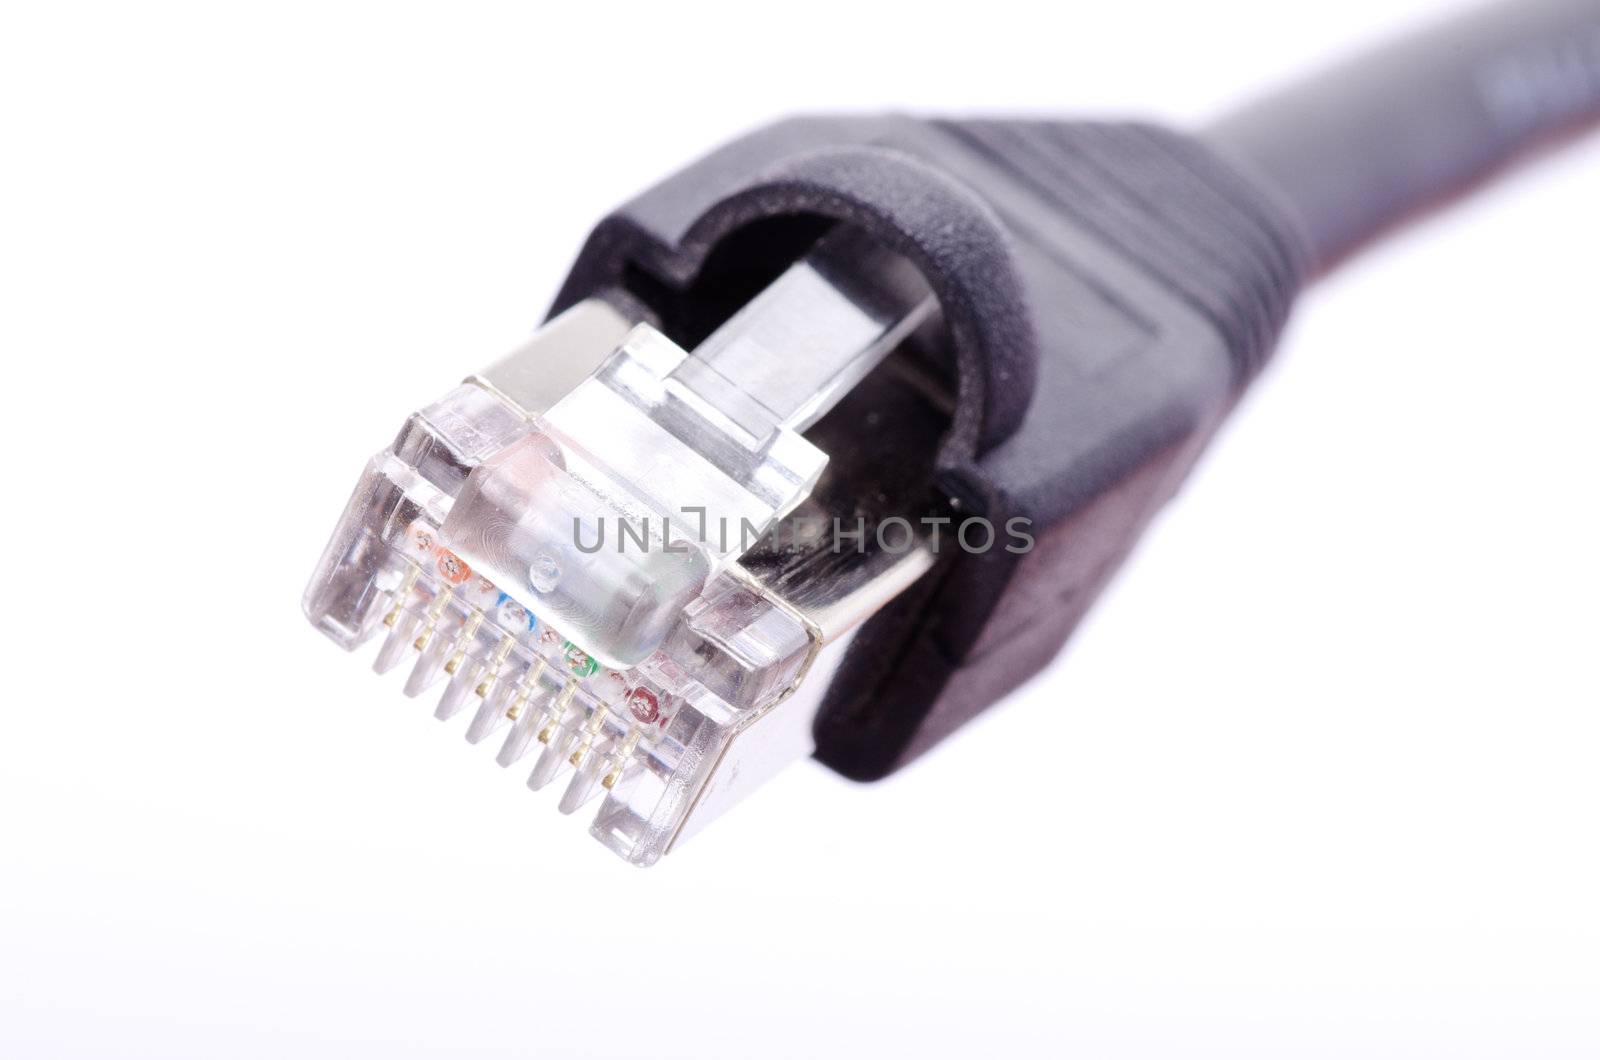  Macro shot of network connection plug